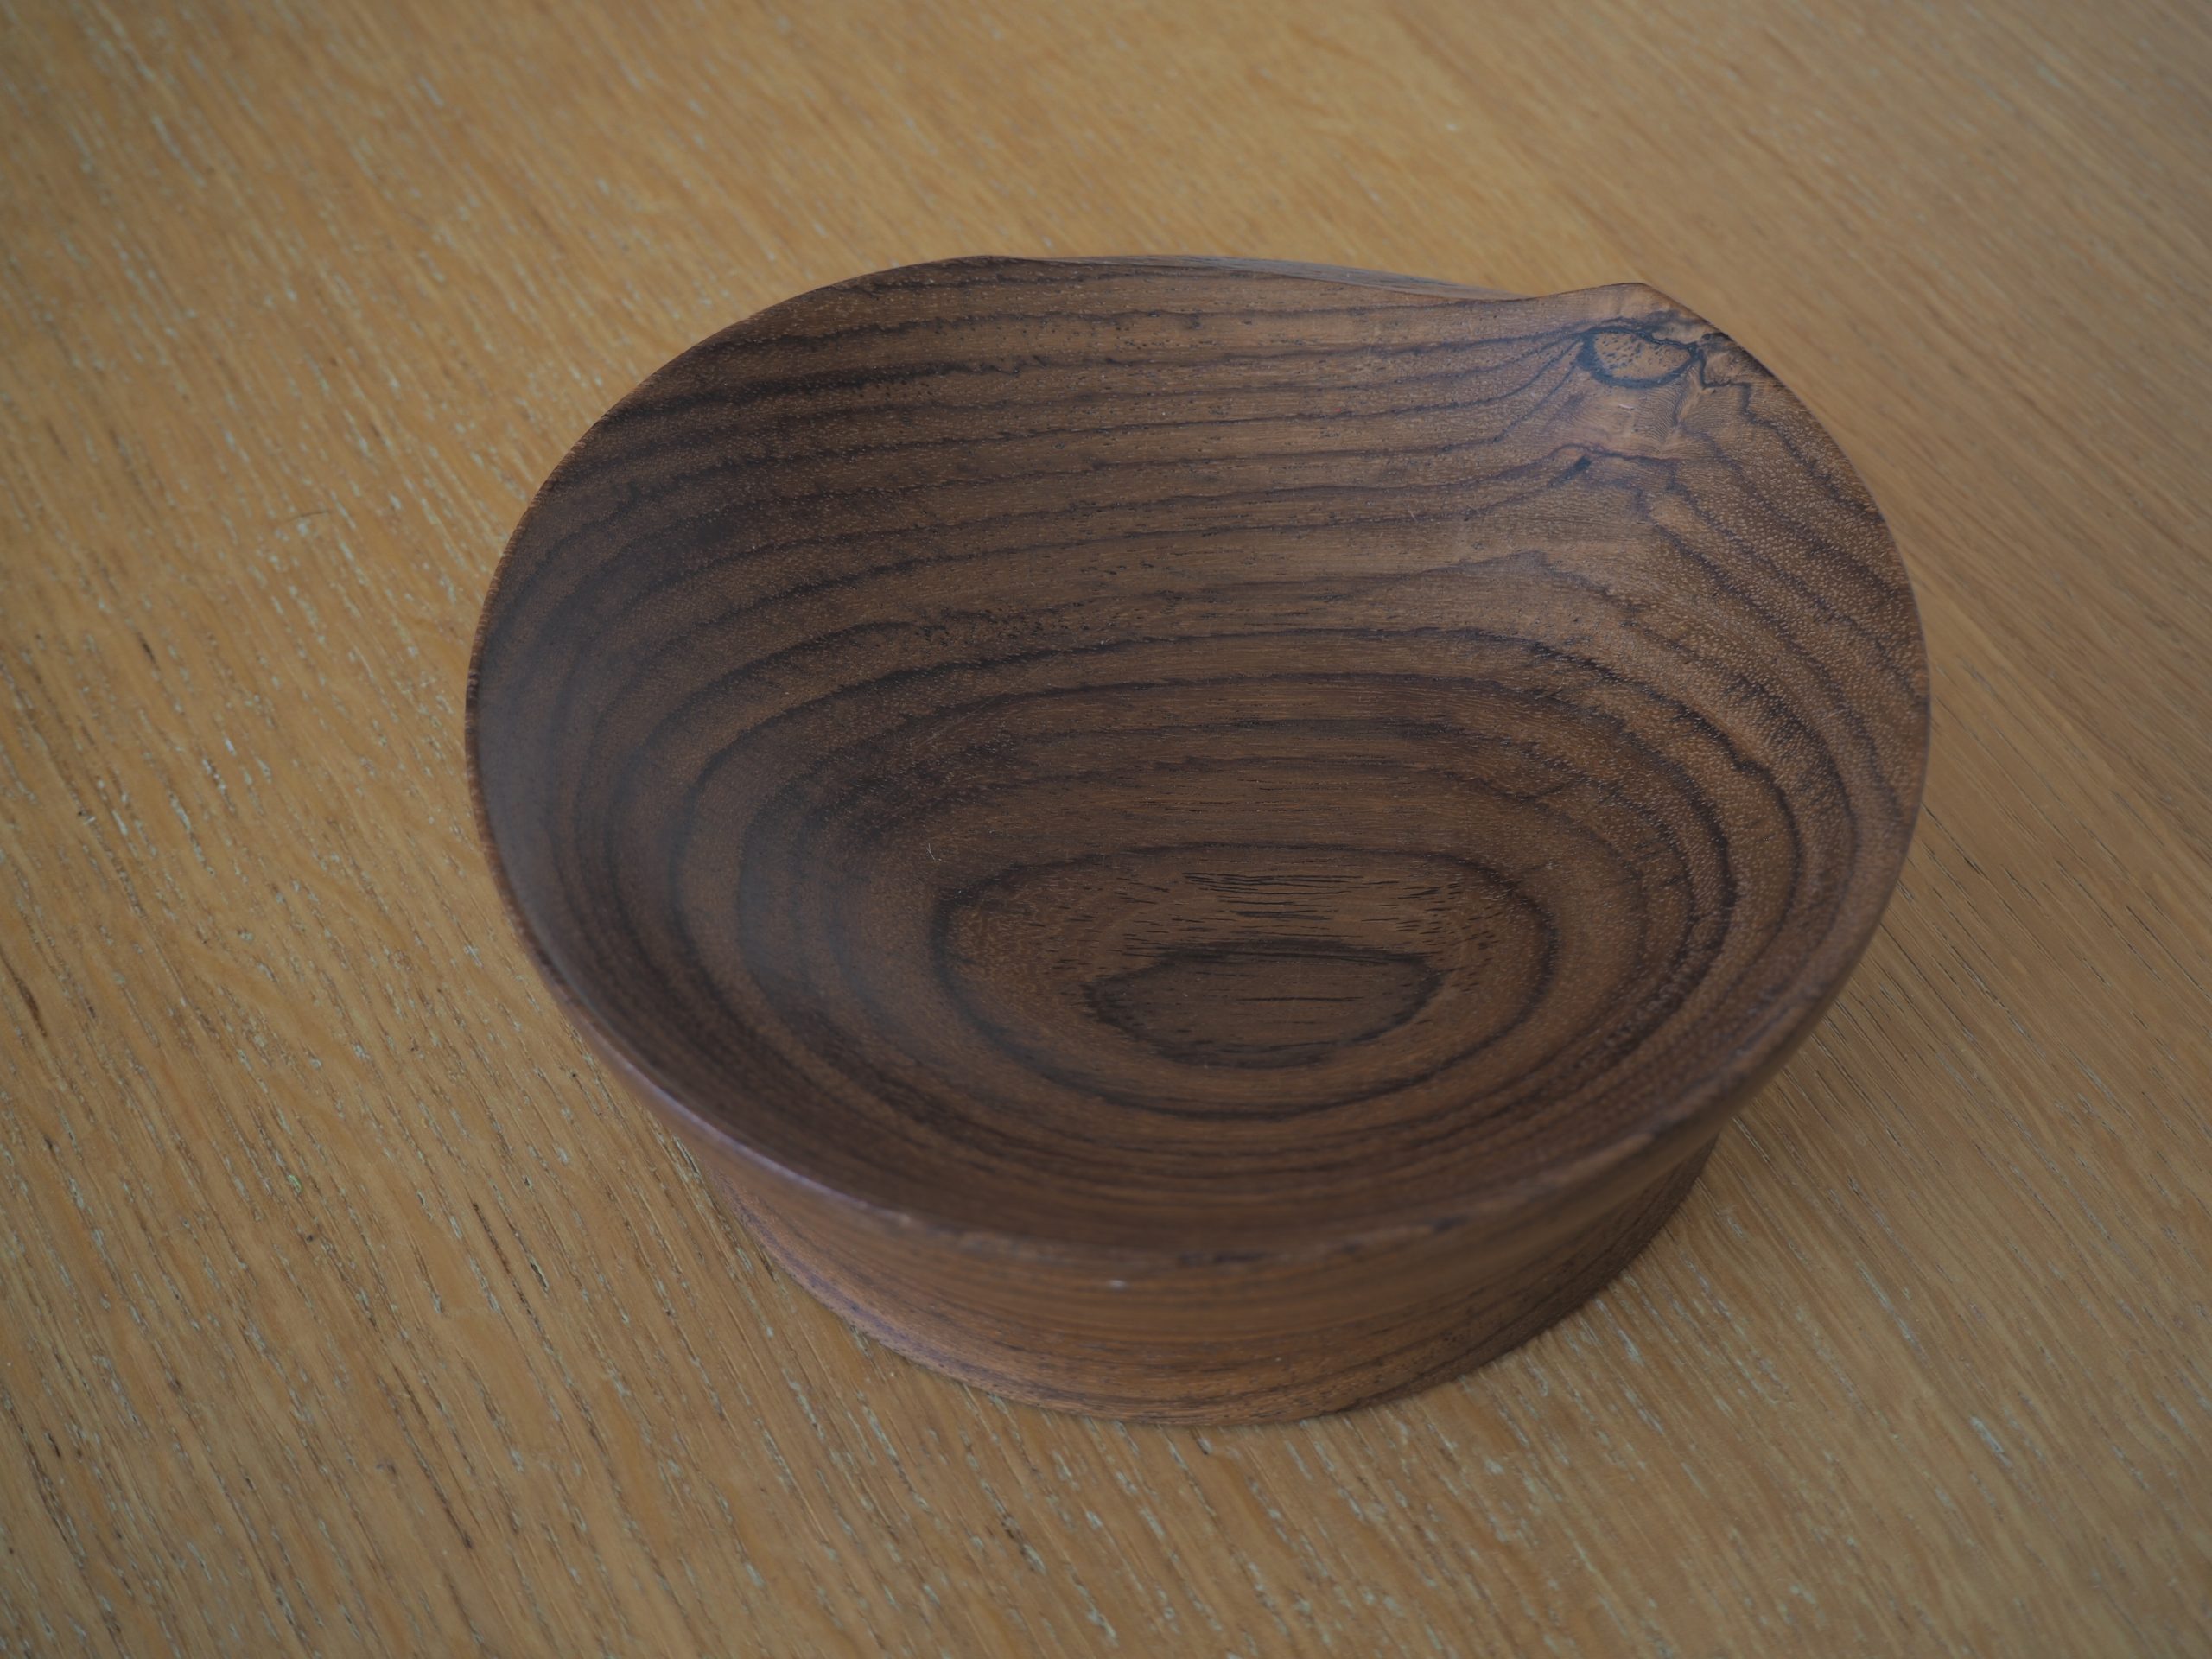 Walnut sideboard bowl, Turned on a lathe.